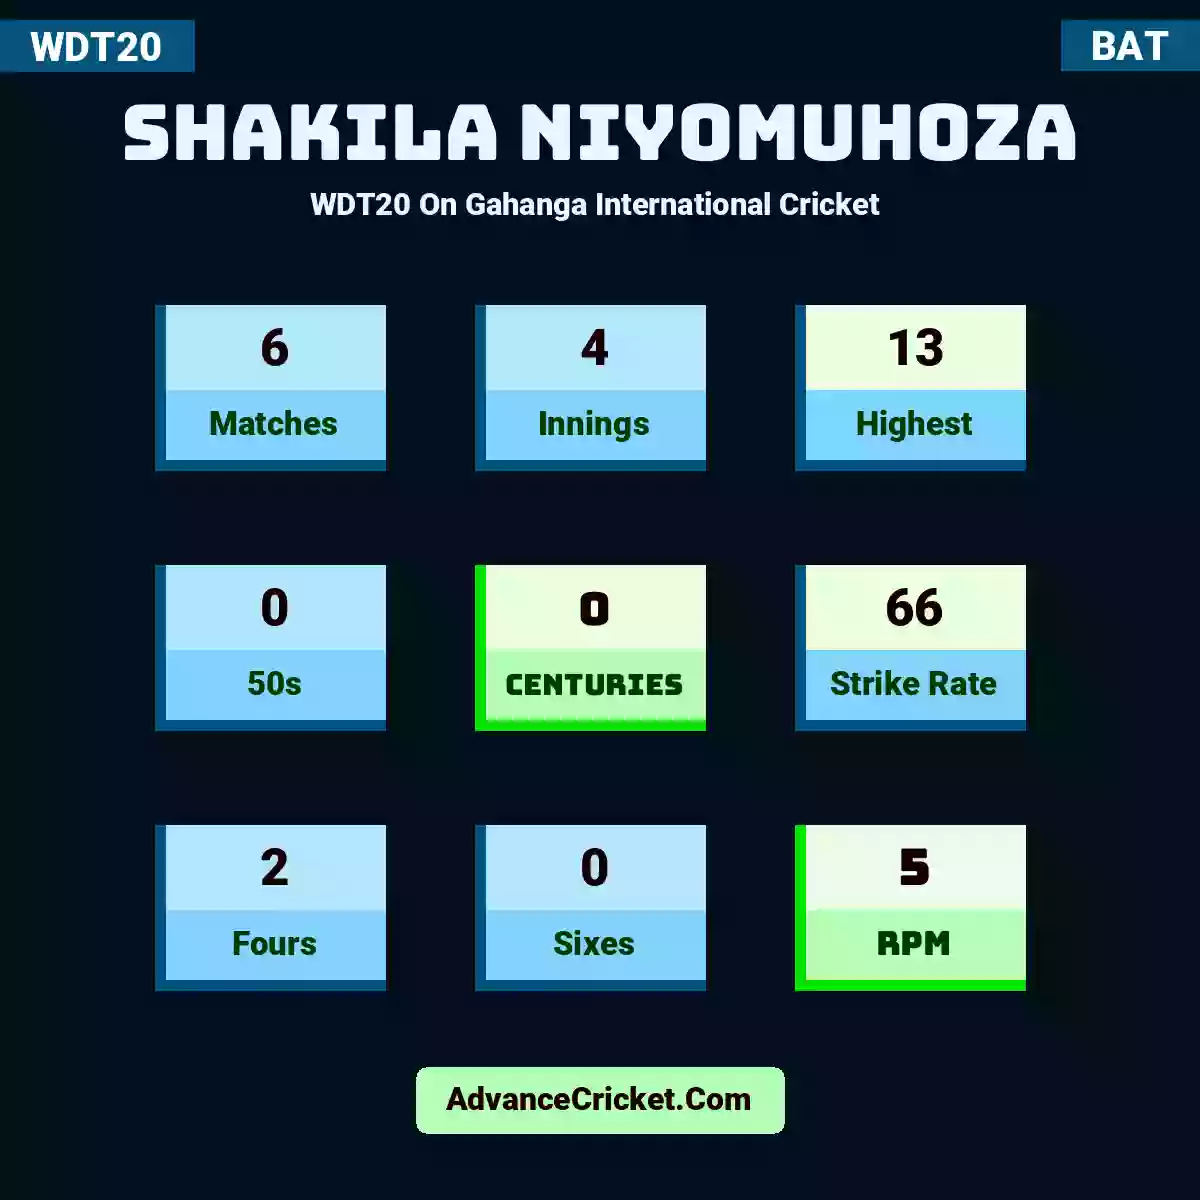 Shakila Niyomuhoza WDT20  On Gahanga International Cricket , Shakila Niyomuhoza played 6 matches, scored 13 runs as highest, 0 half-centuries, and 0 centuries, with a strike rate of 66. S.Niyomuhoza hit 2 fours and 0 sixes, with an RPM of 5.